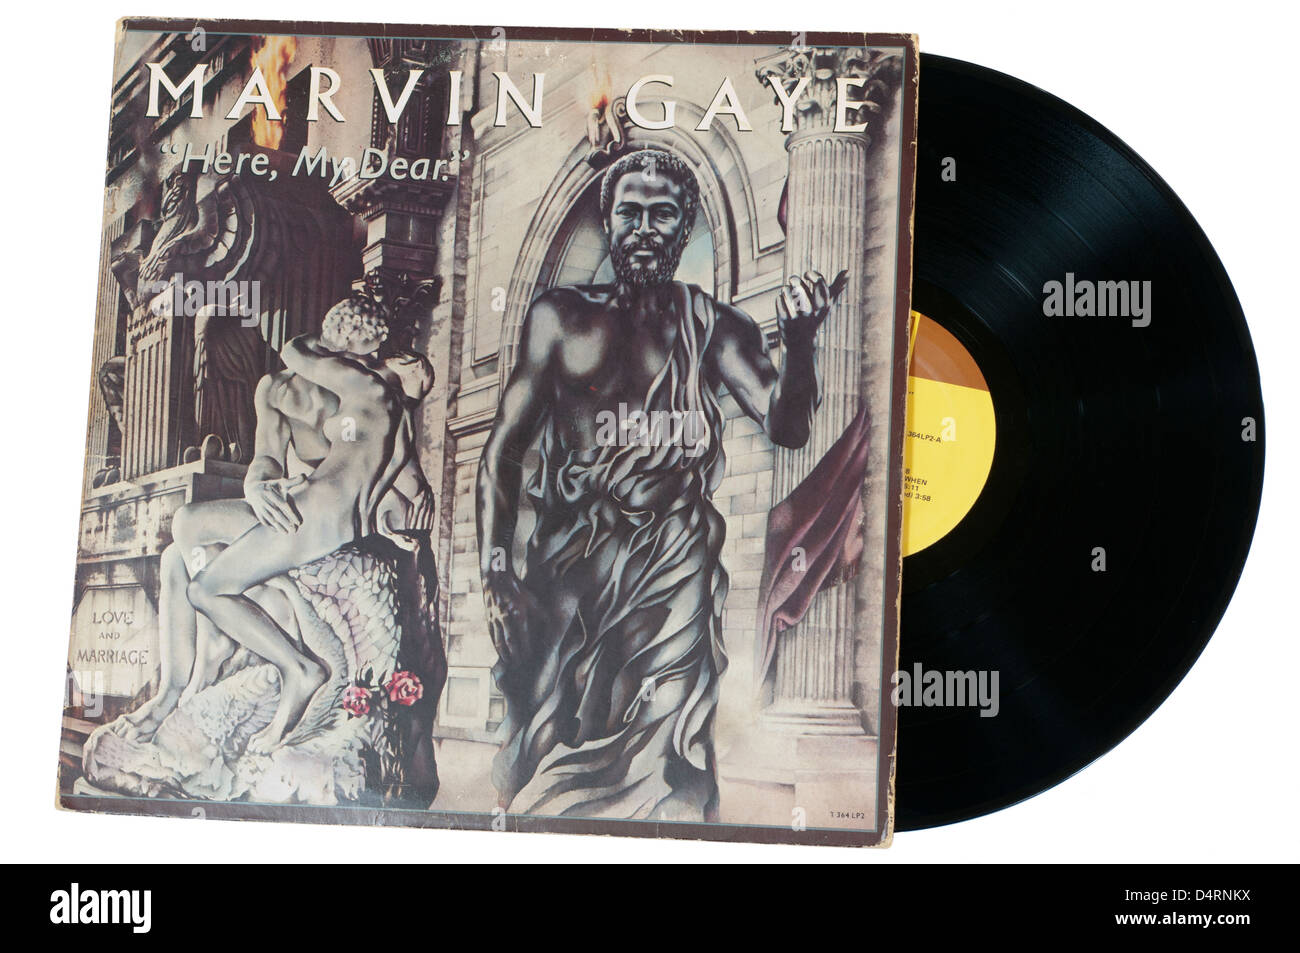 Marvin Gaye Here My Dear Vinyl Record LP Stock Photo